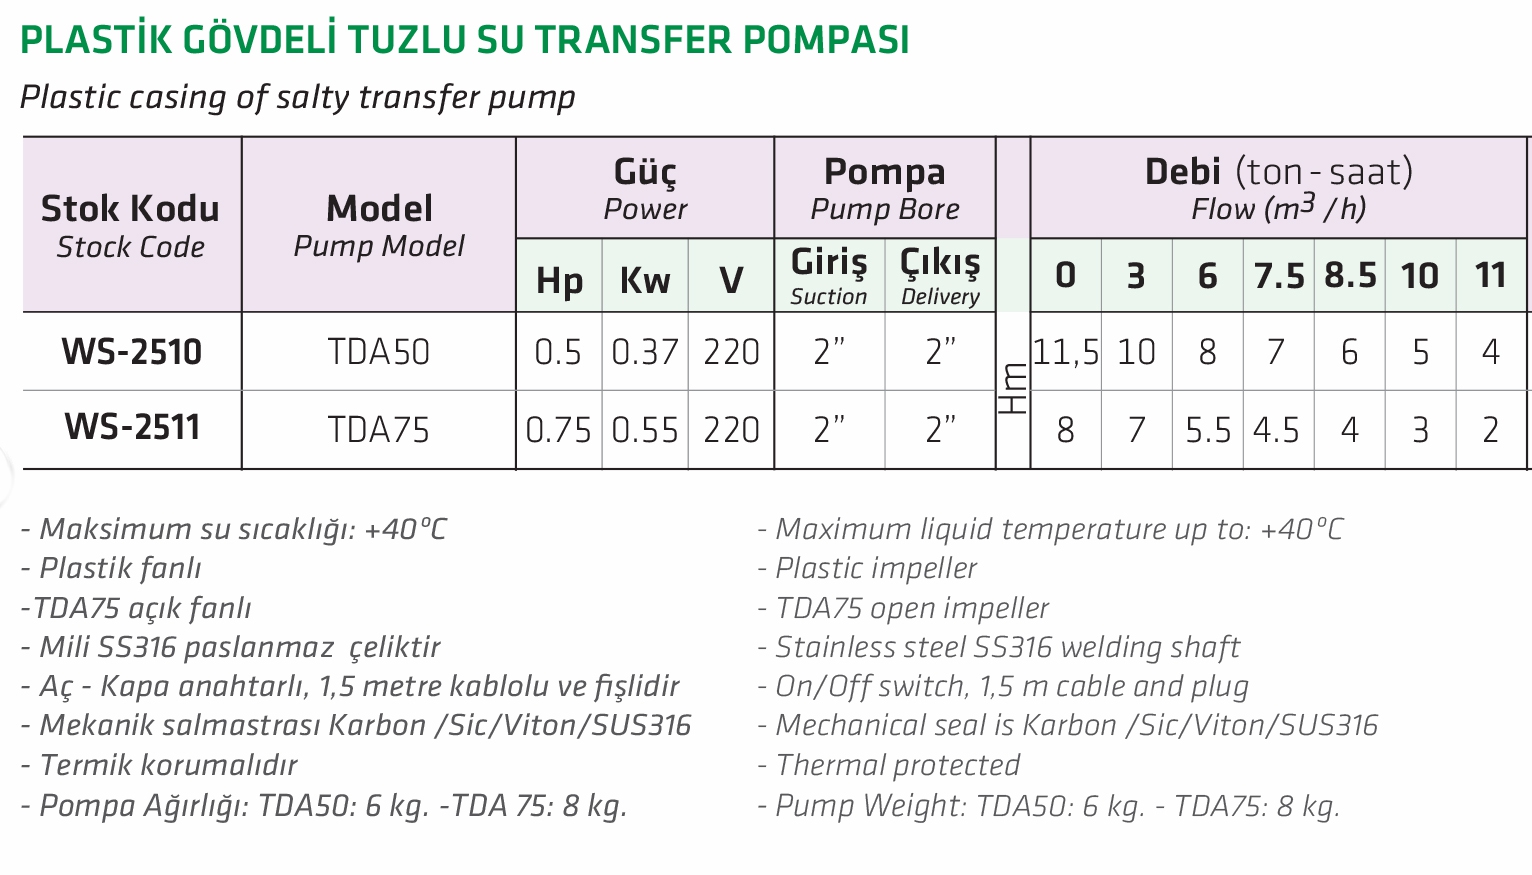 Water Sound TDA50 0.5 HP Plastik Gövdeli Tuzlu Su Transfer Pompası